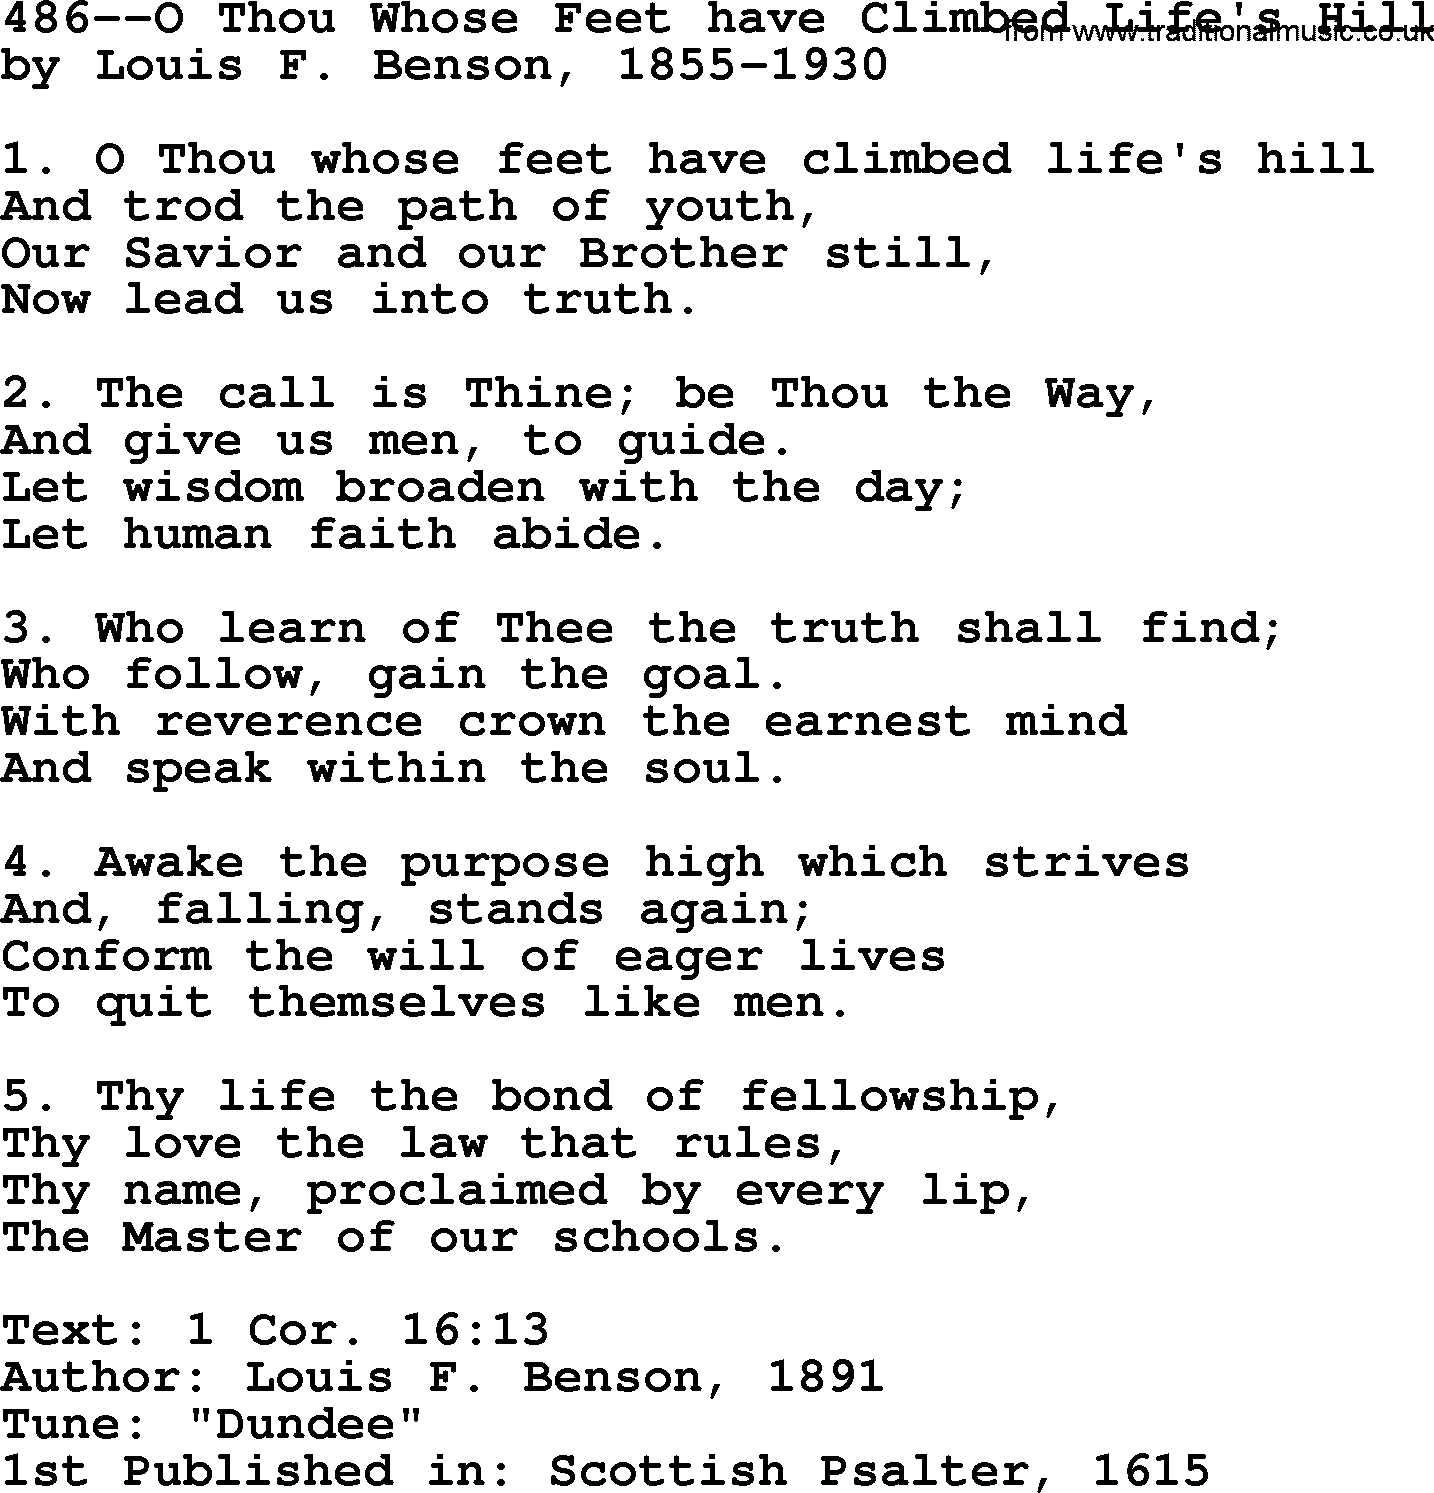 Lutheran Hymn: 486--O Thou Whose Feet have Climbed Life's Hill.txt lyrics with PDF